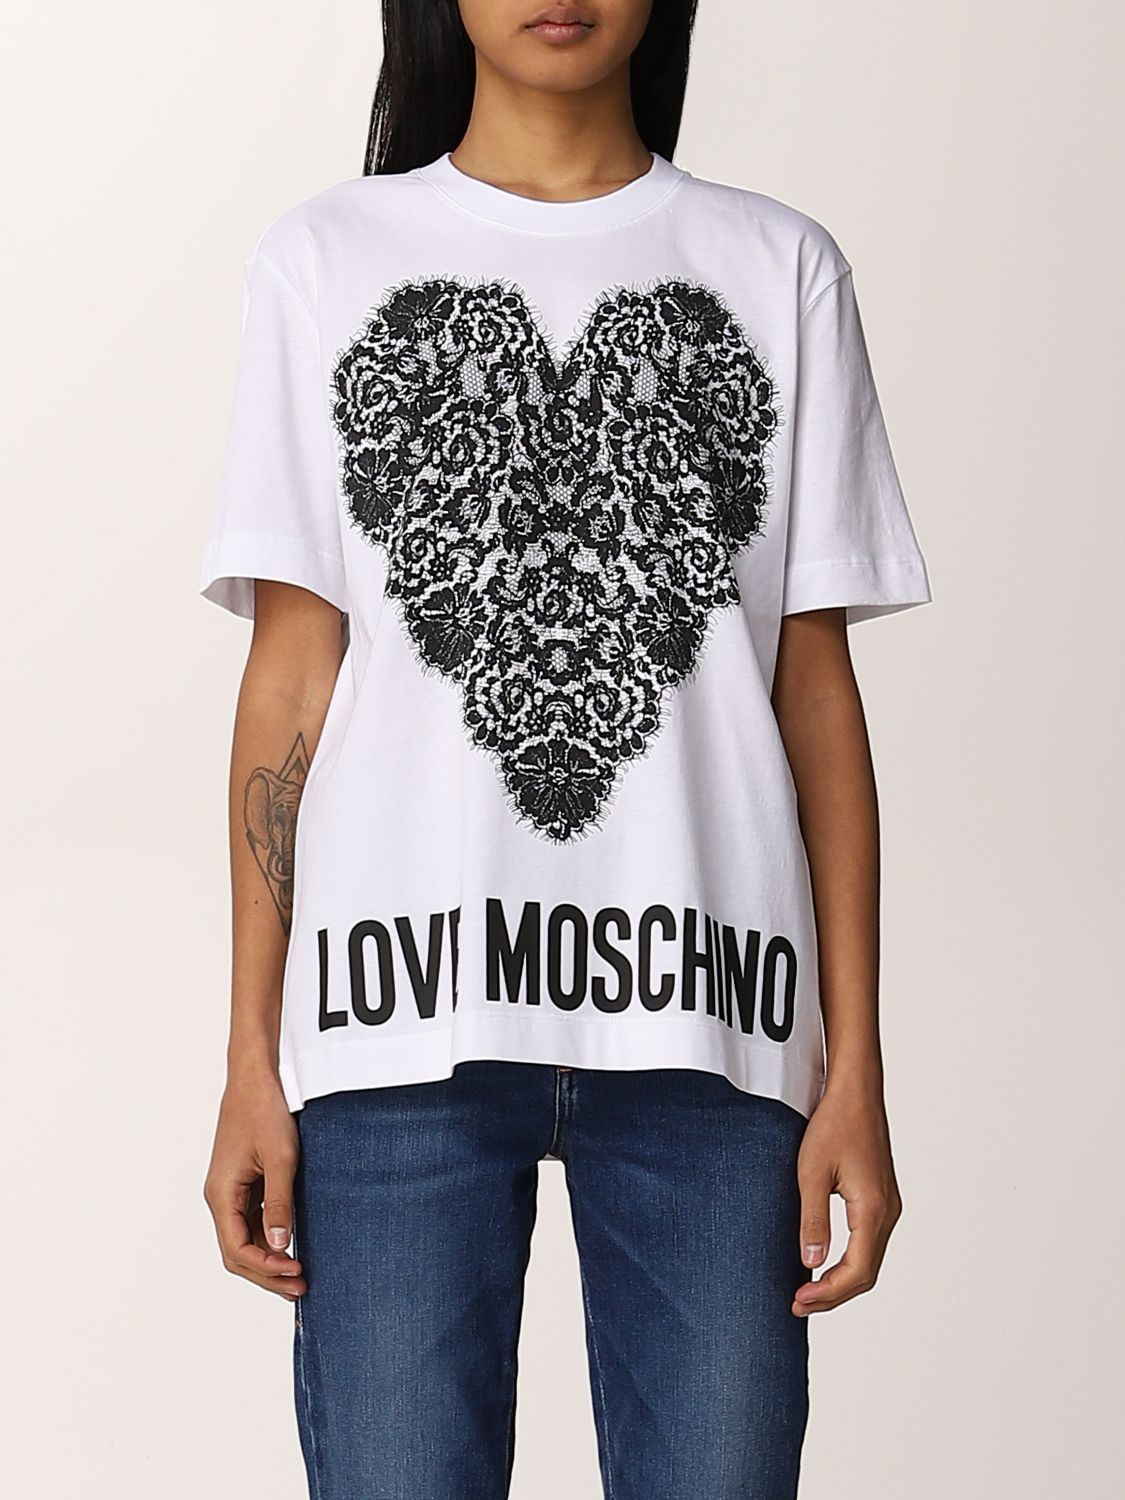 love moschino t shirt Off 69% - www.loverethymno.com